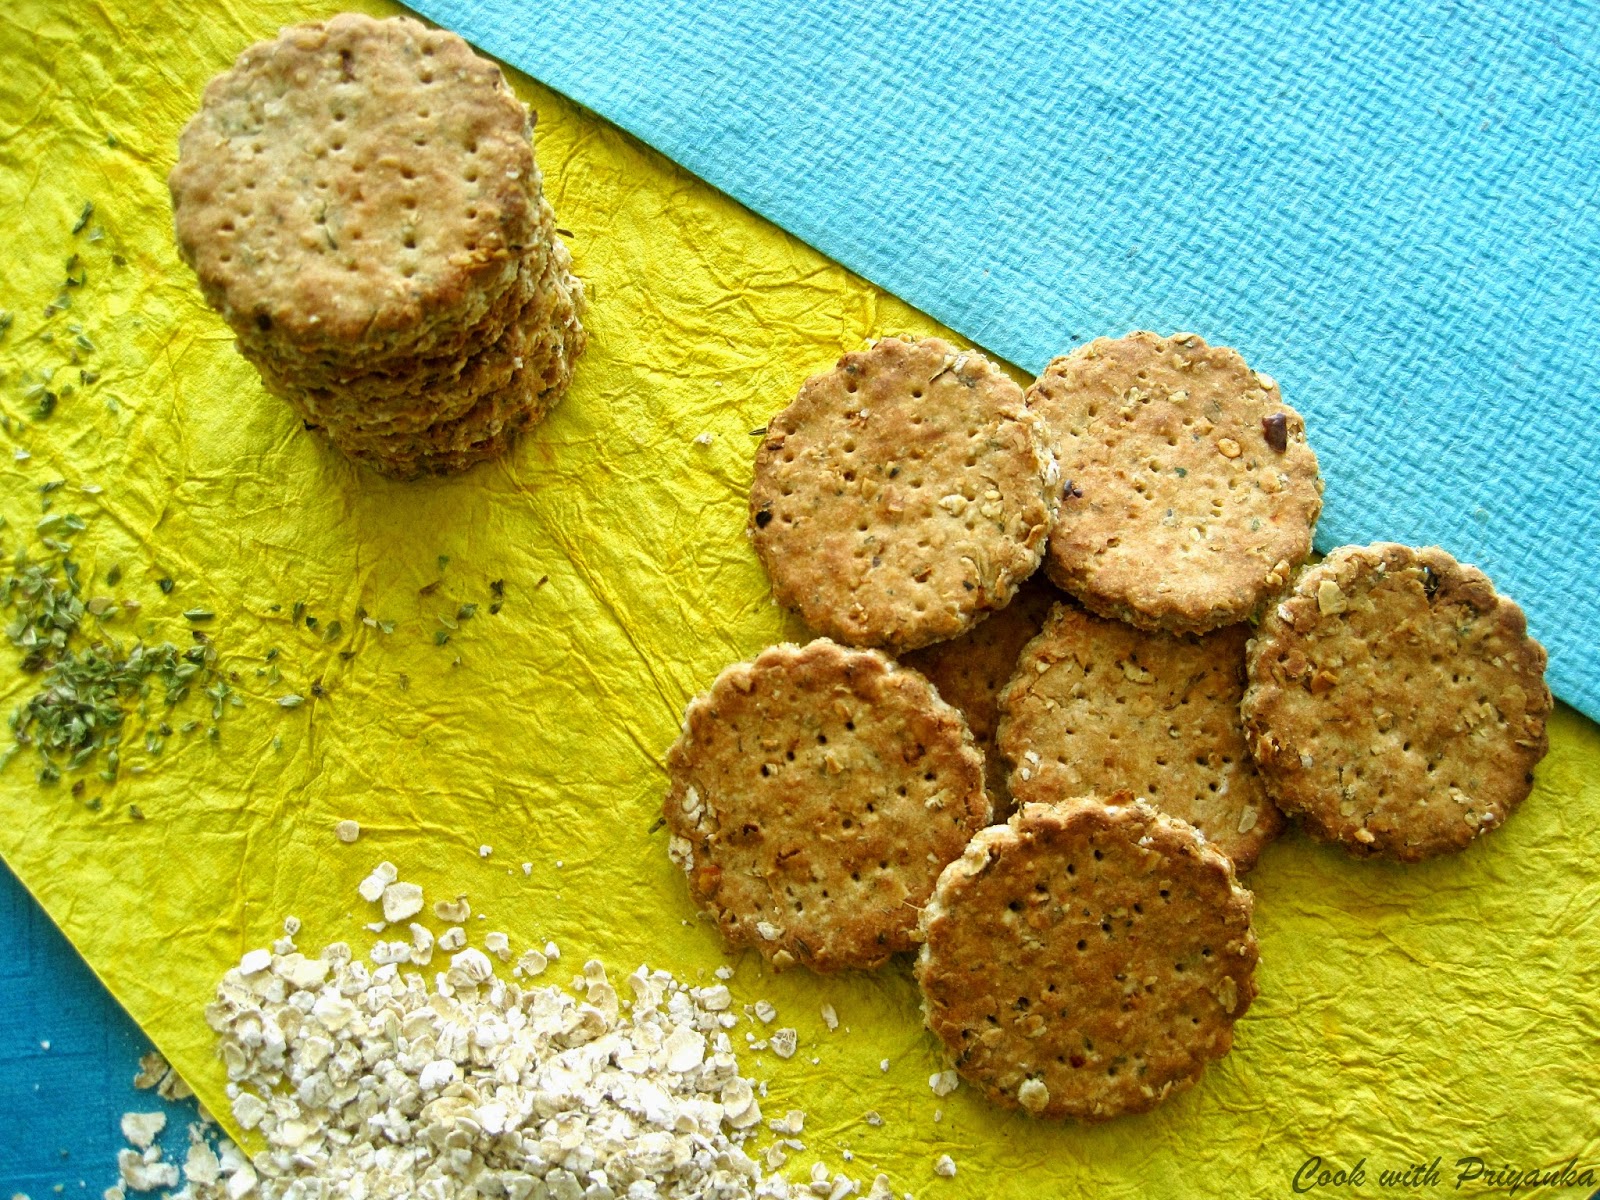 http://cookwithpriyankavarma.blogspot.co.uk/2014/04/oats-whole-wheat-crackers-with-kick-of.html